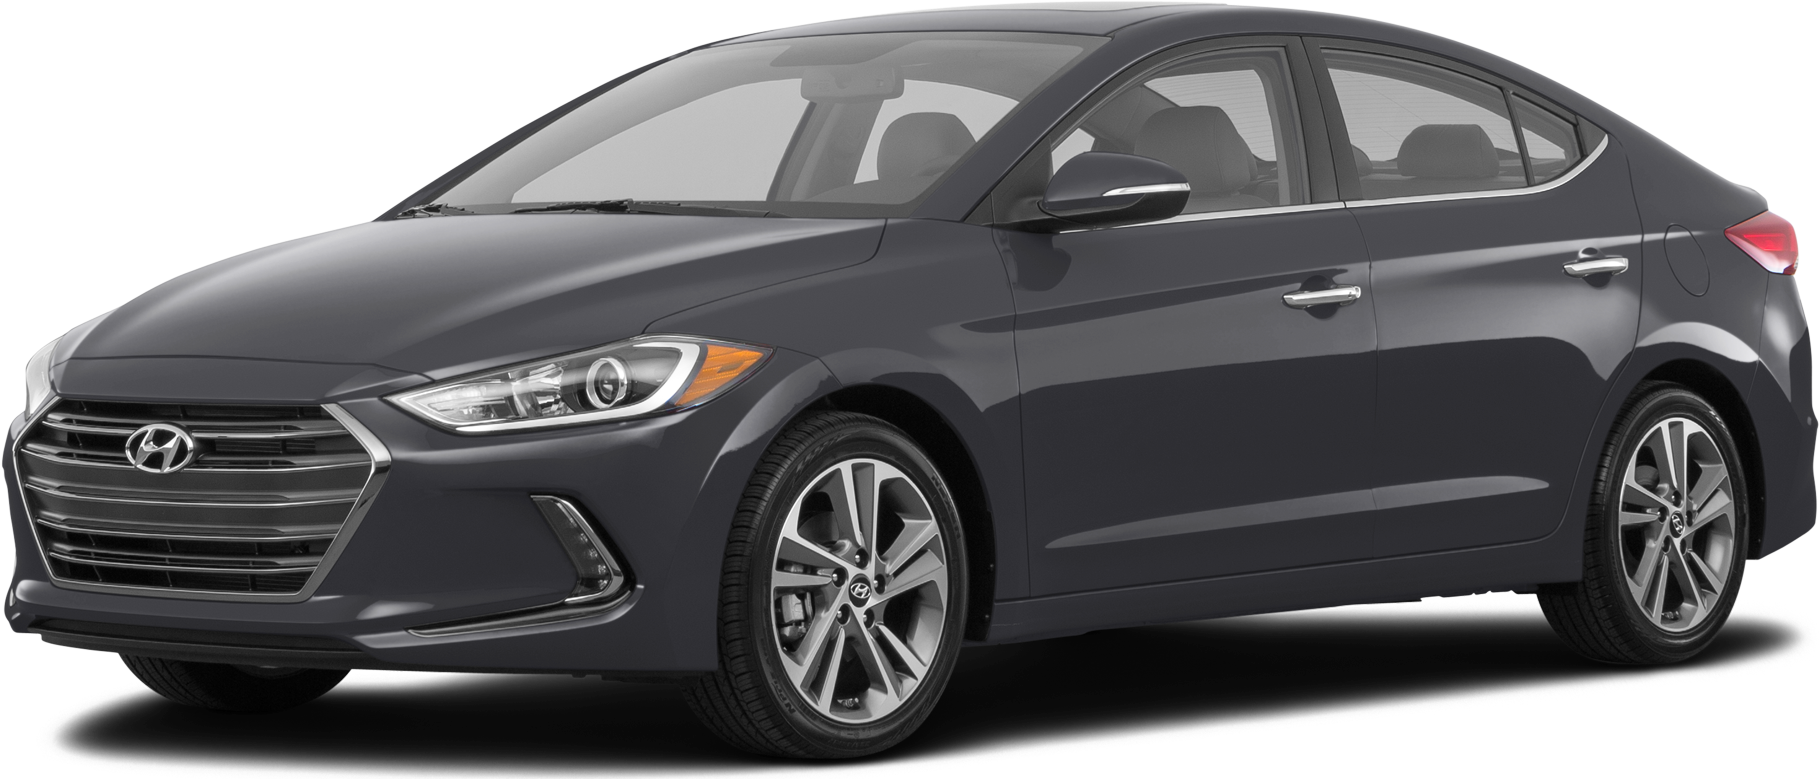 Savage on Wheels 2017 Hyundai Elantra Limited milder but still an  exceptional value